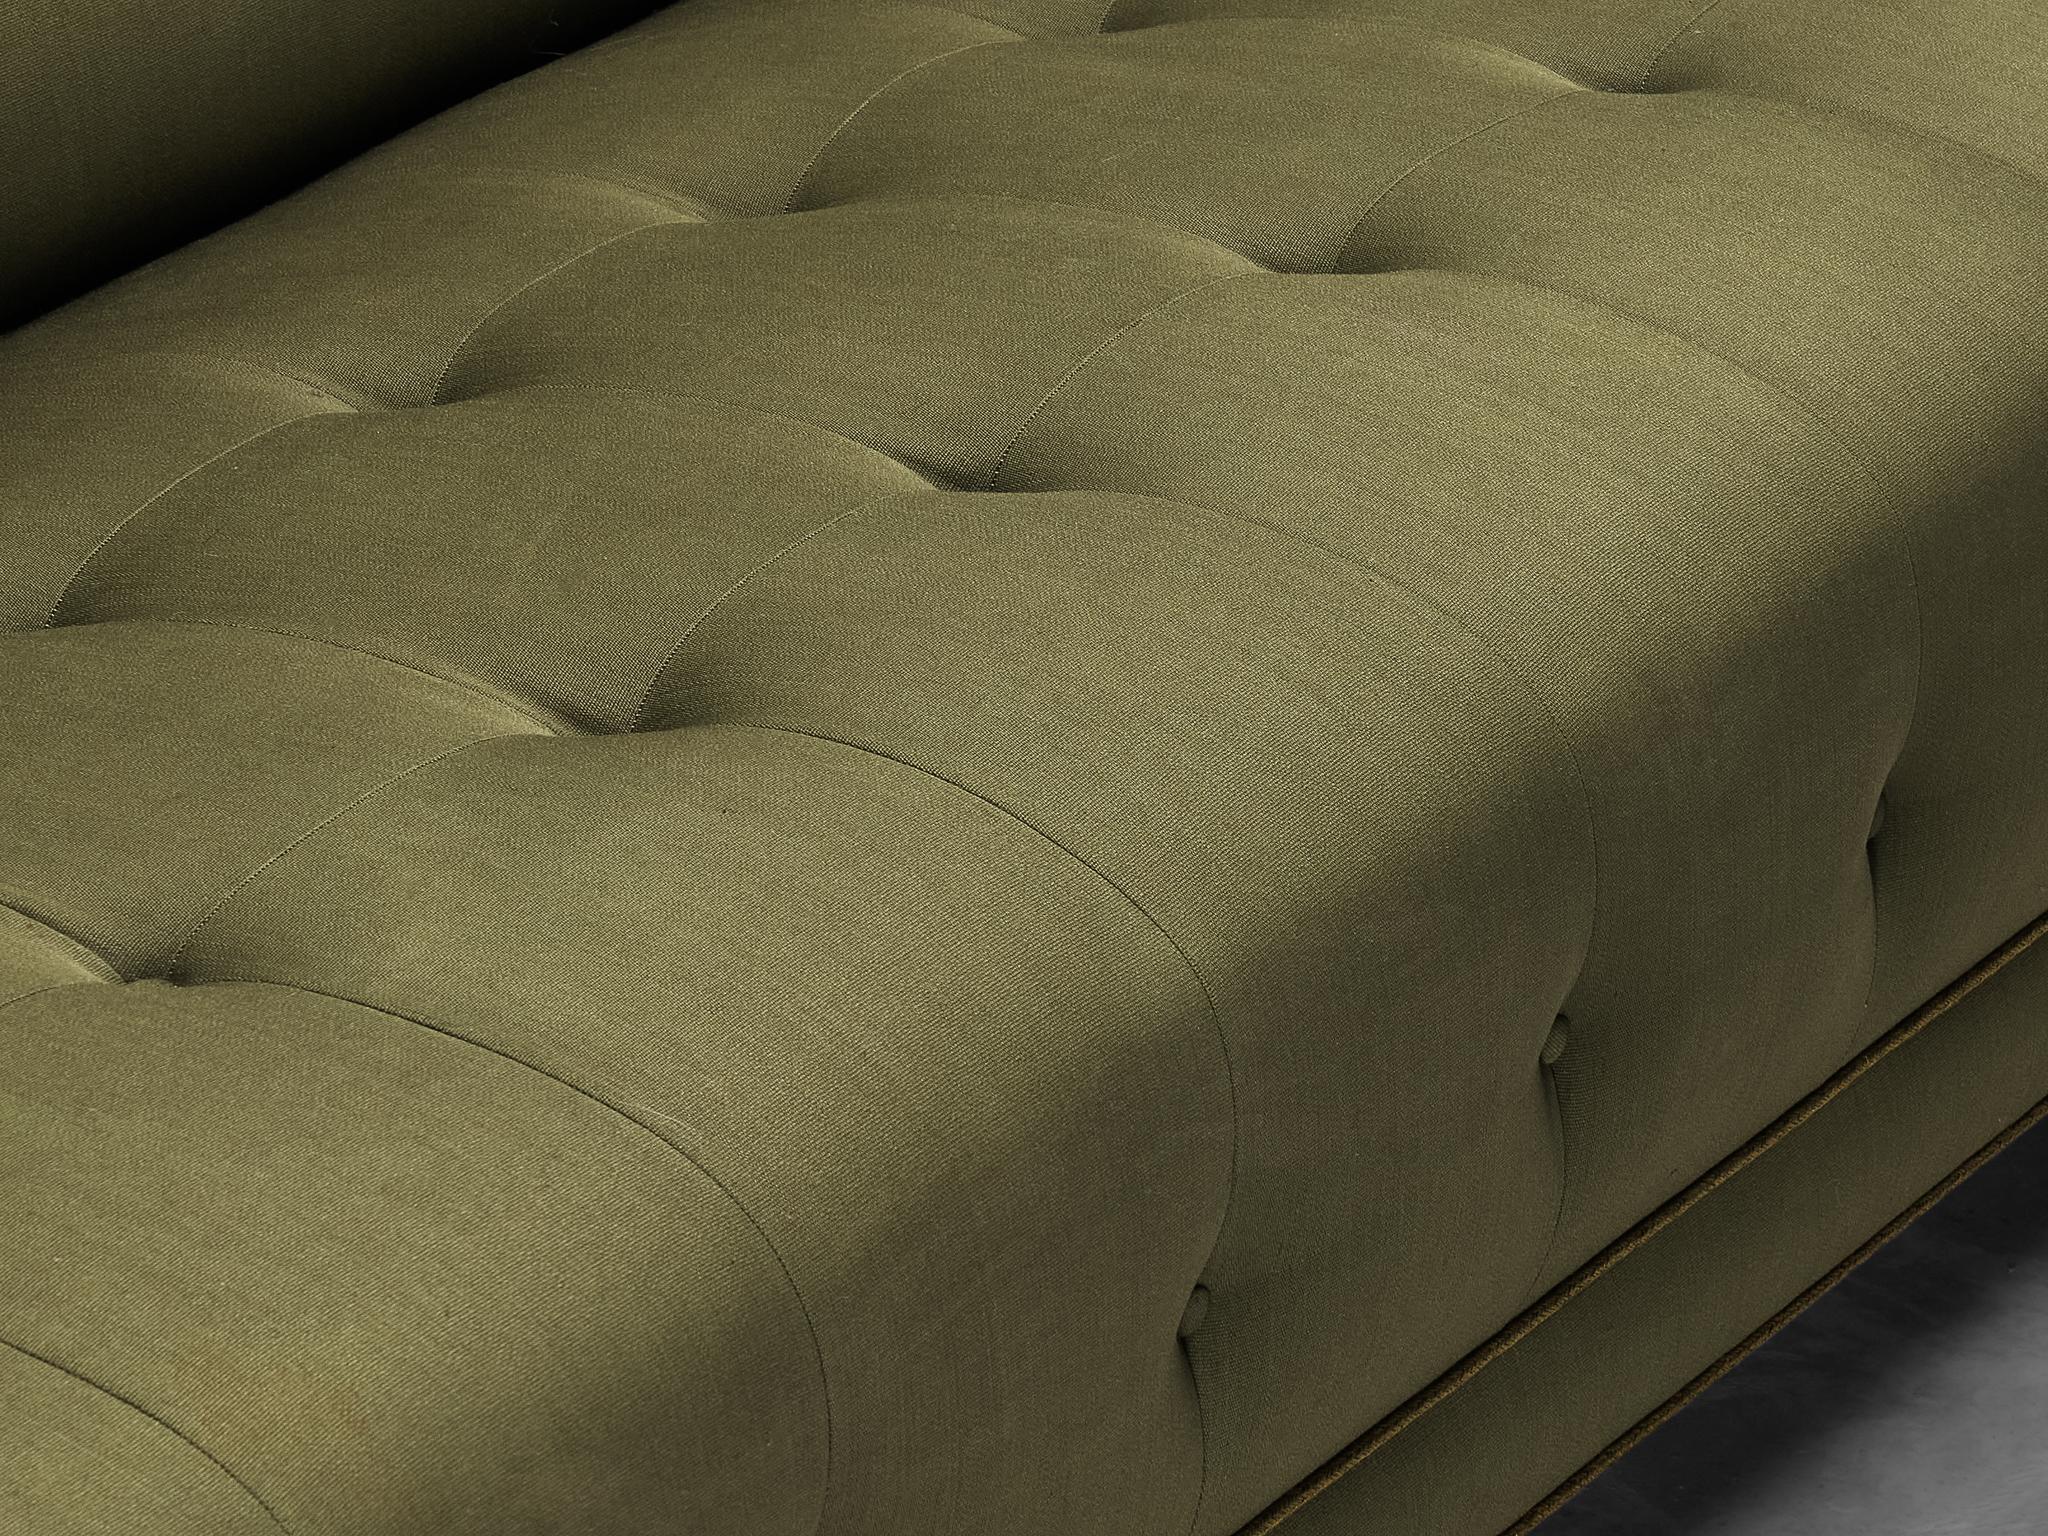 Swedish Art Deco Sofa in Olive Green Upholstery